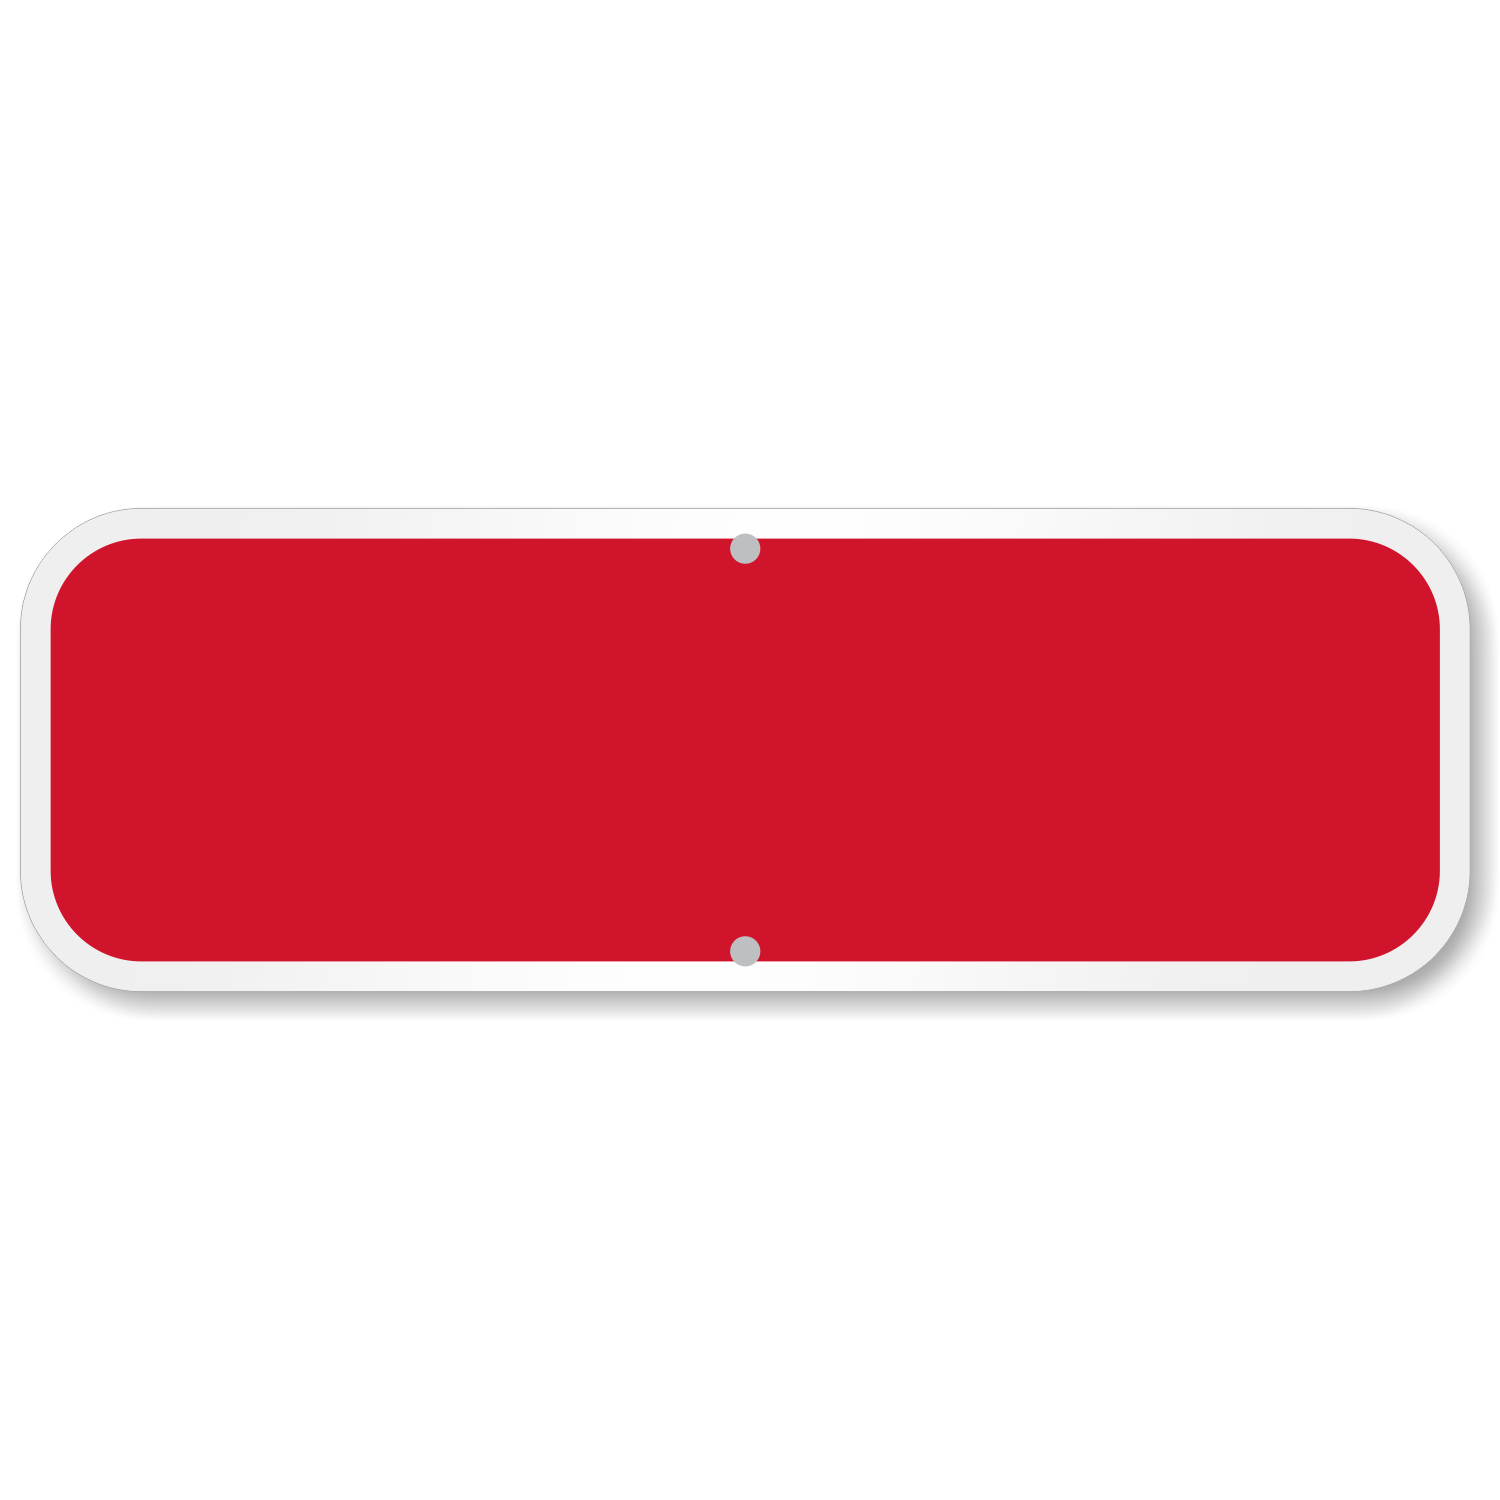 Cabin Rental Directional Arrow Sign